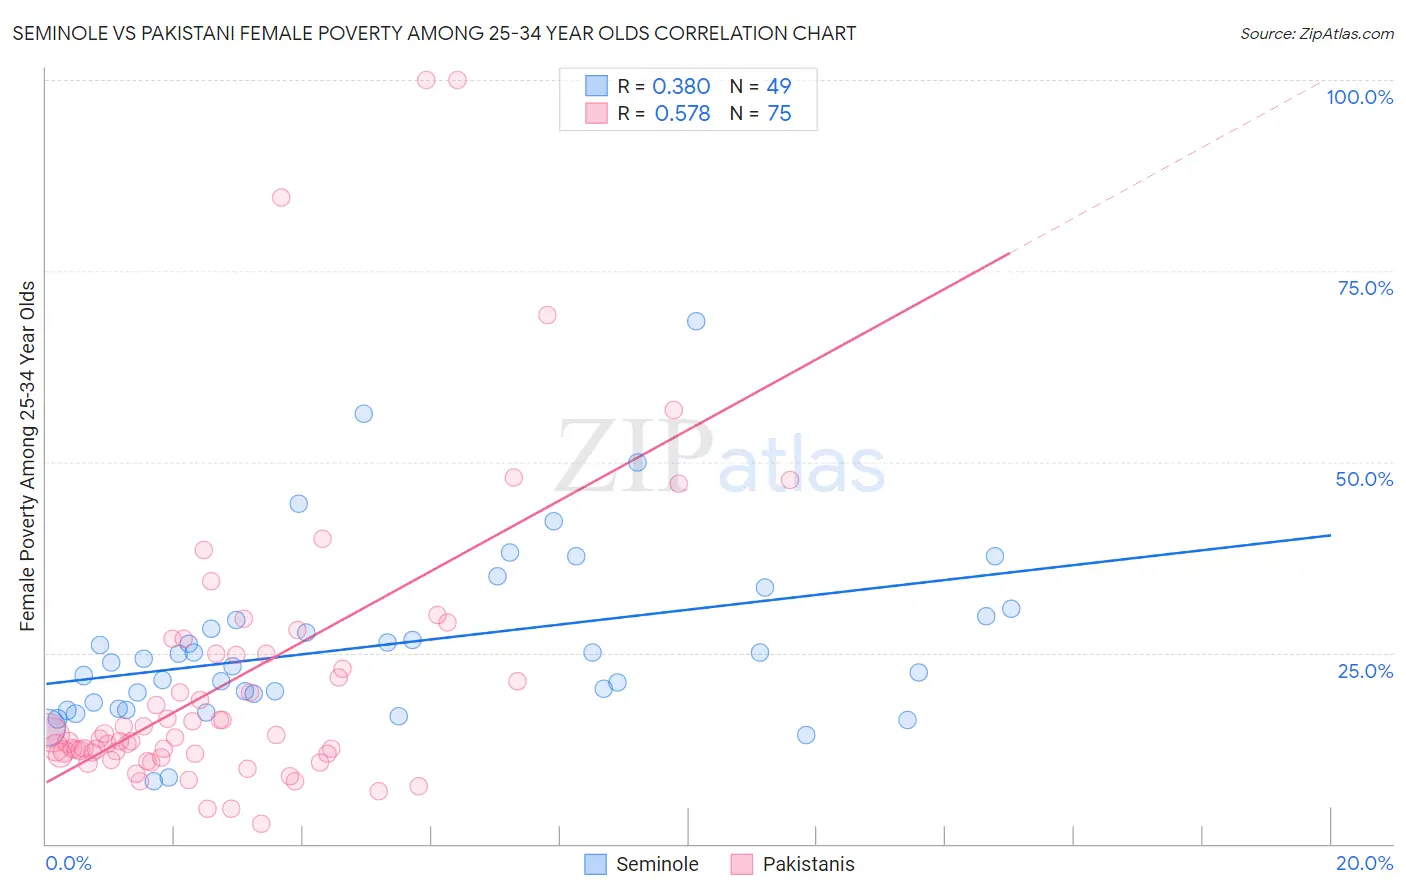 Seminole vs Pakistani Female Poverty Among 25-34 Year Olds